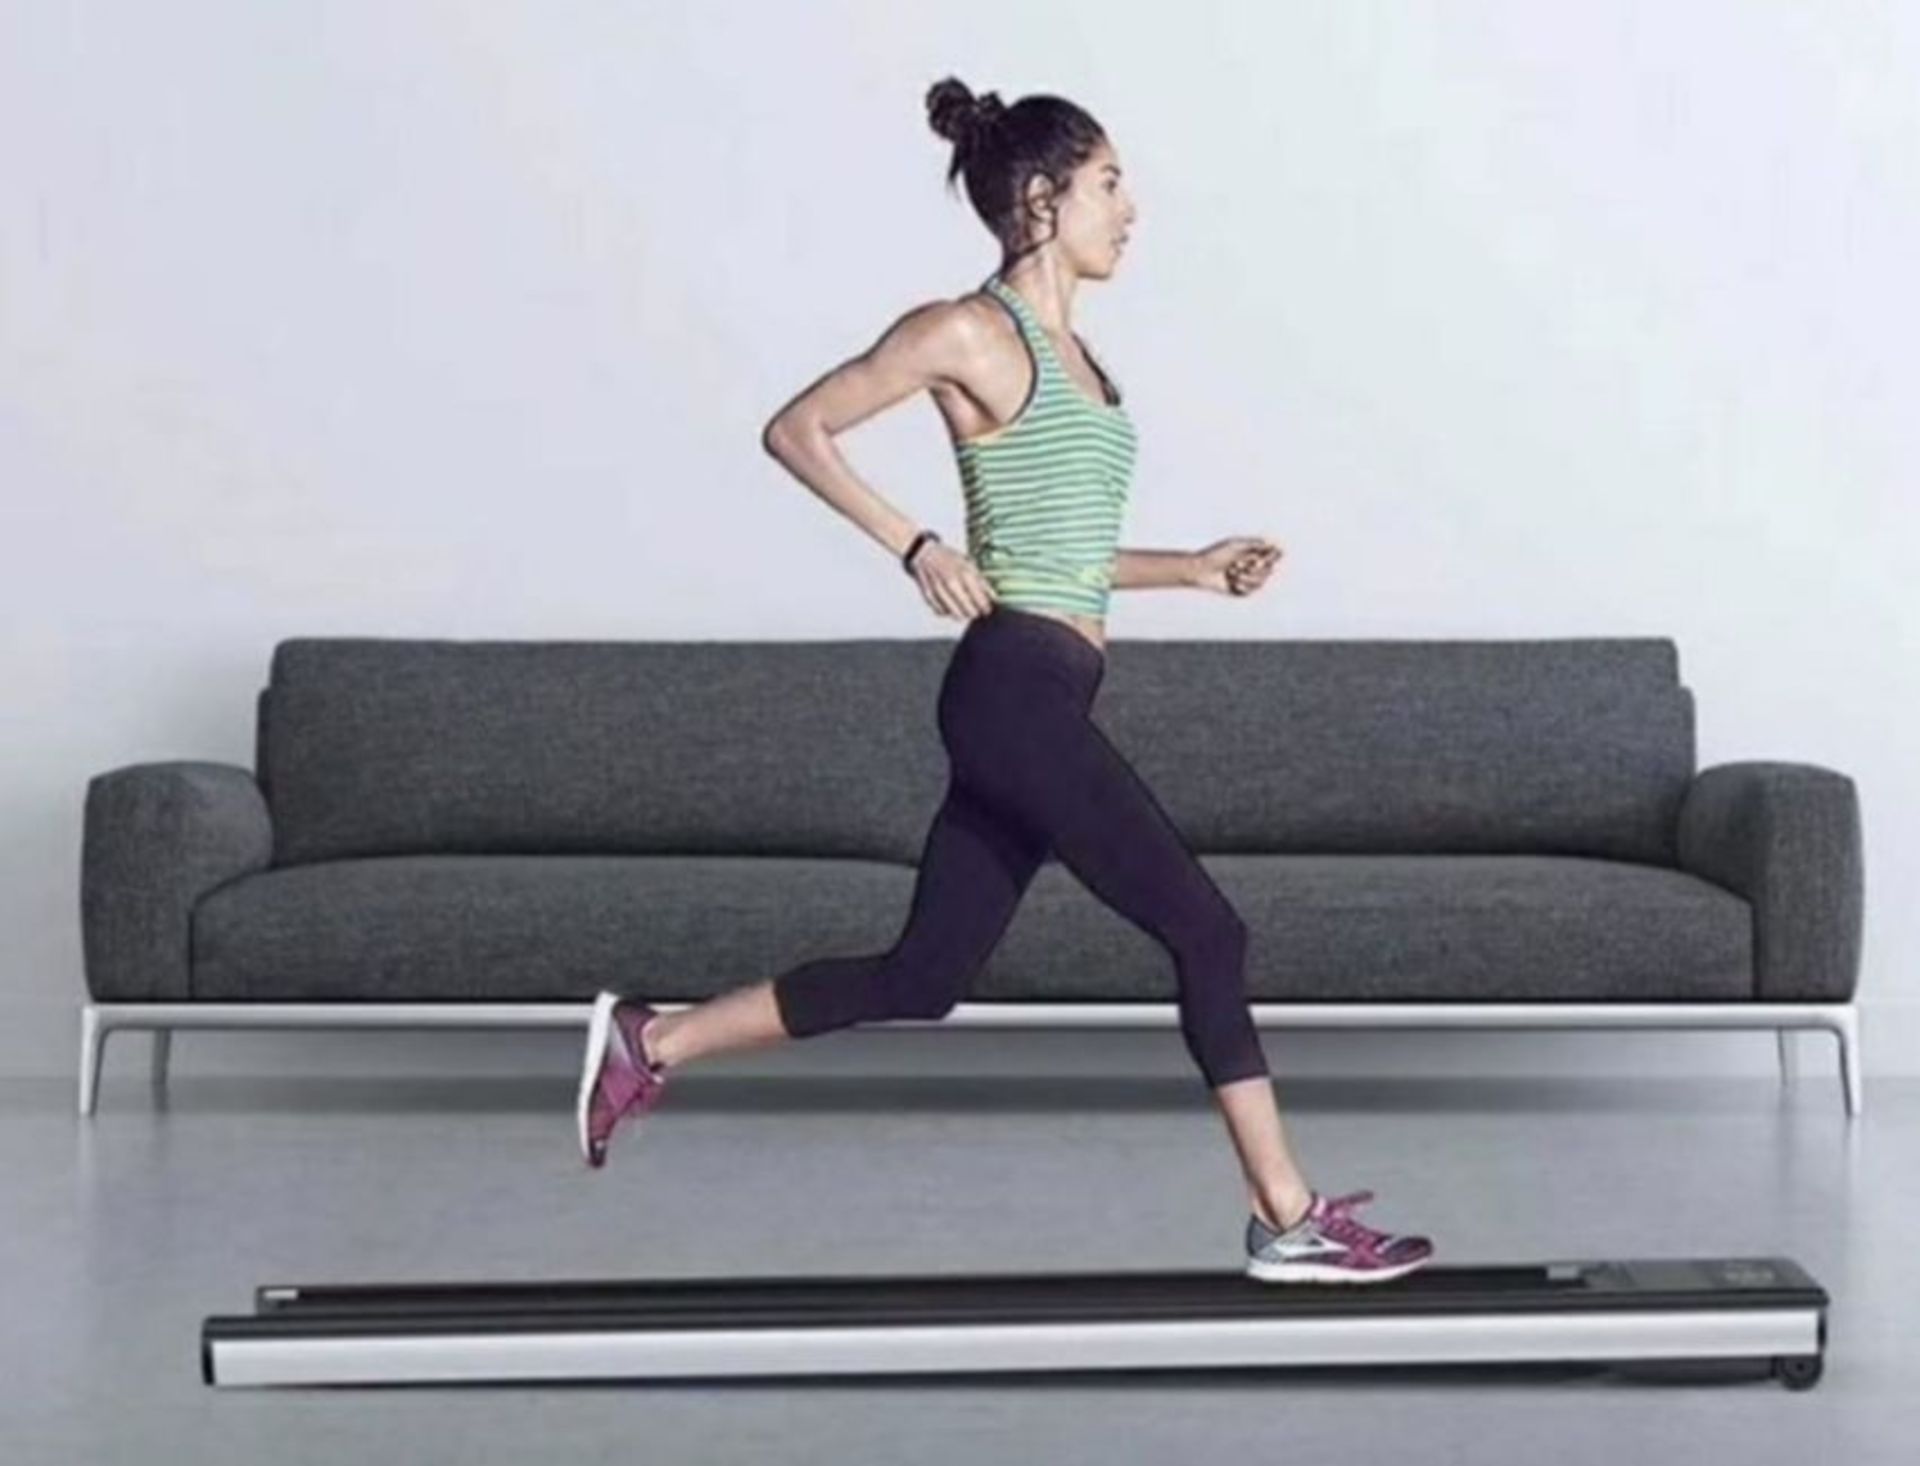 1 x Slim Tread Ultra Thin Smart Treadmill Running / Walking Machine - Lightweight With Folding - Image 4 of 10